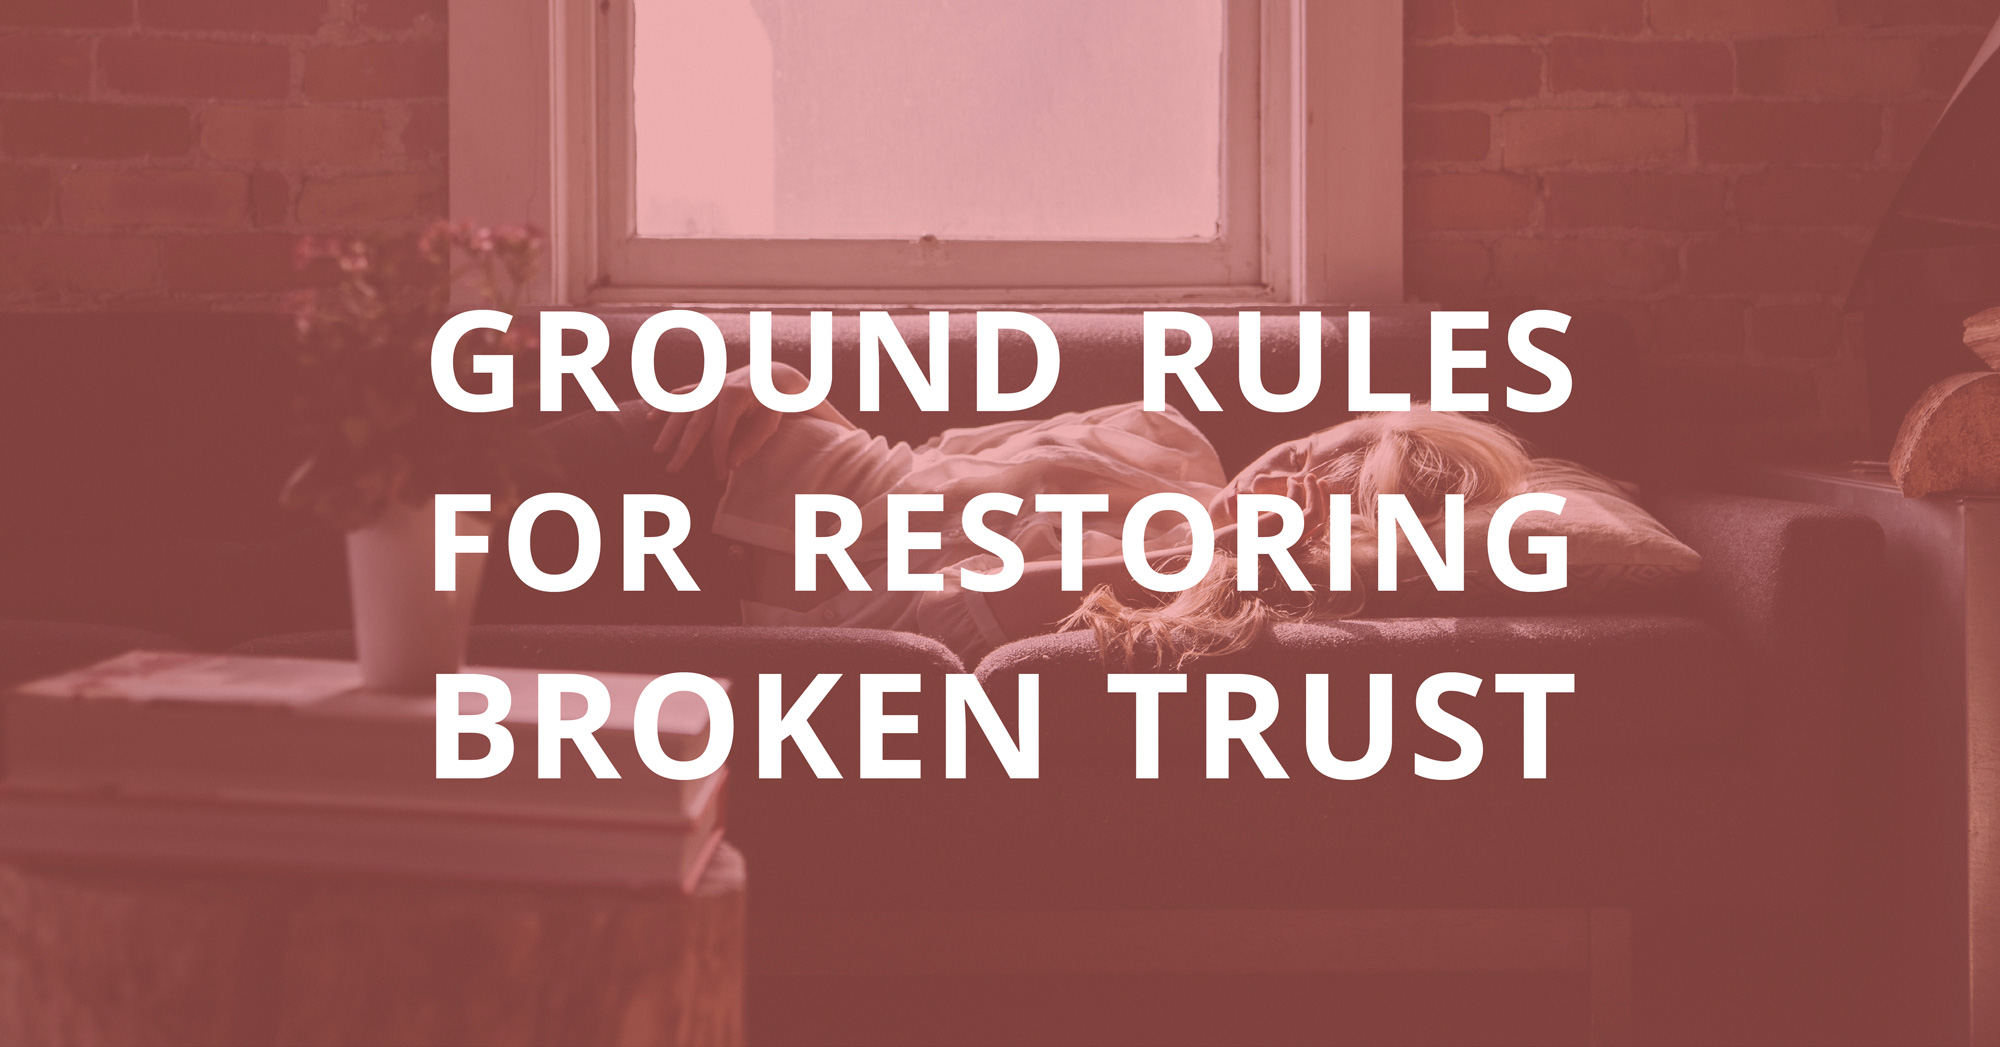 Free Spirit Nudist Couples - Ground Rules for Restoring Broken Trust - SYMBIS Assessment